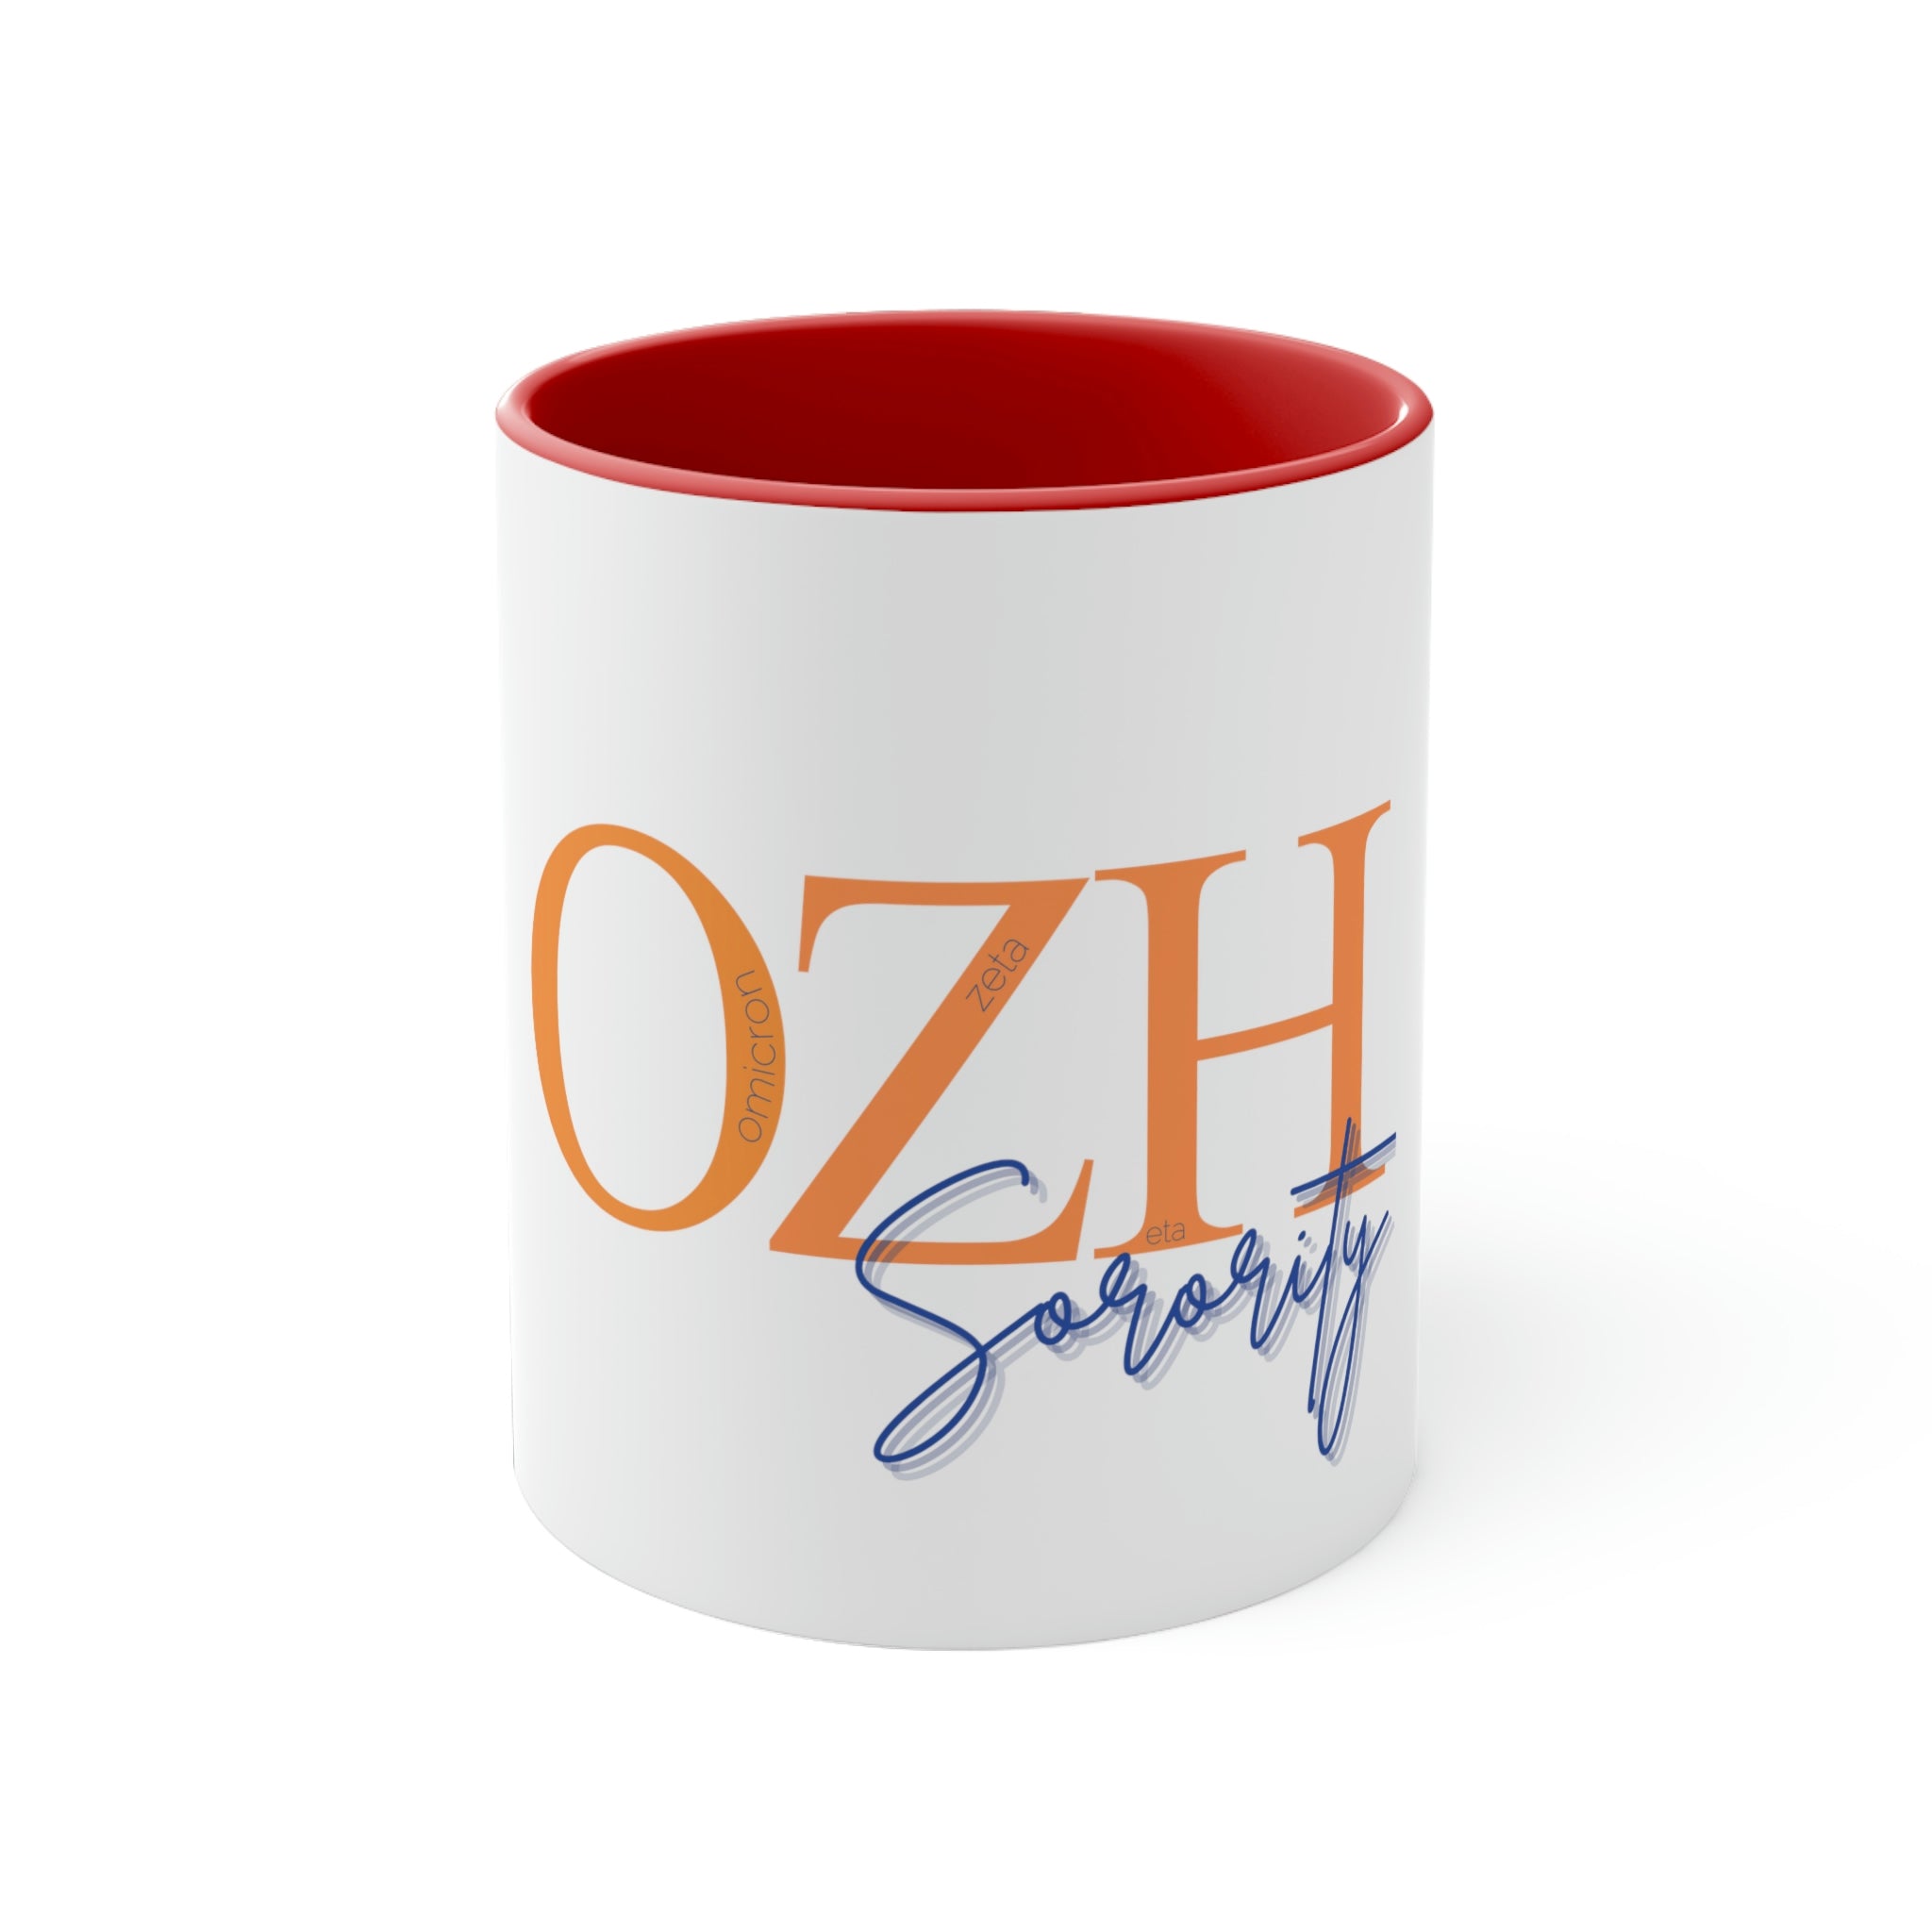 Omicron Zeta Eta Accent Coffee Mug, 11oz (orange letters)